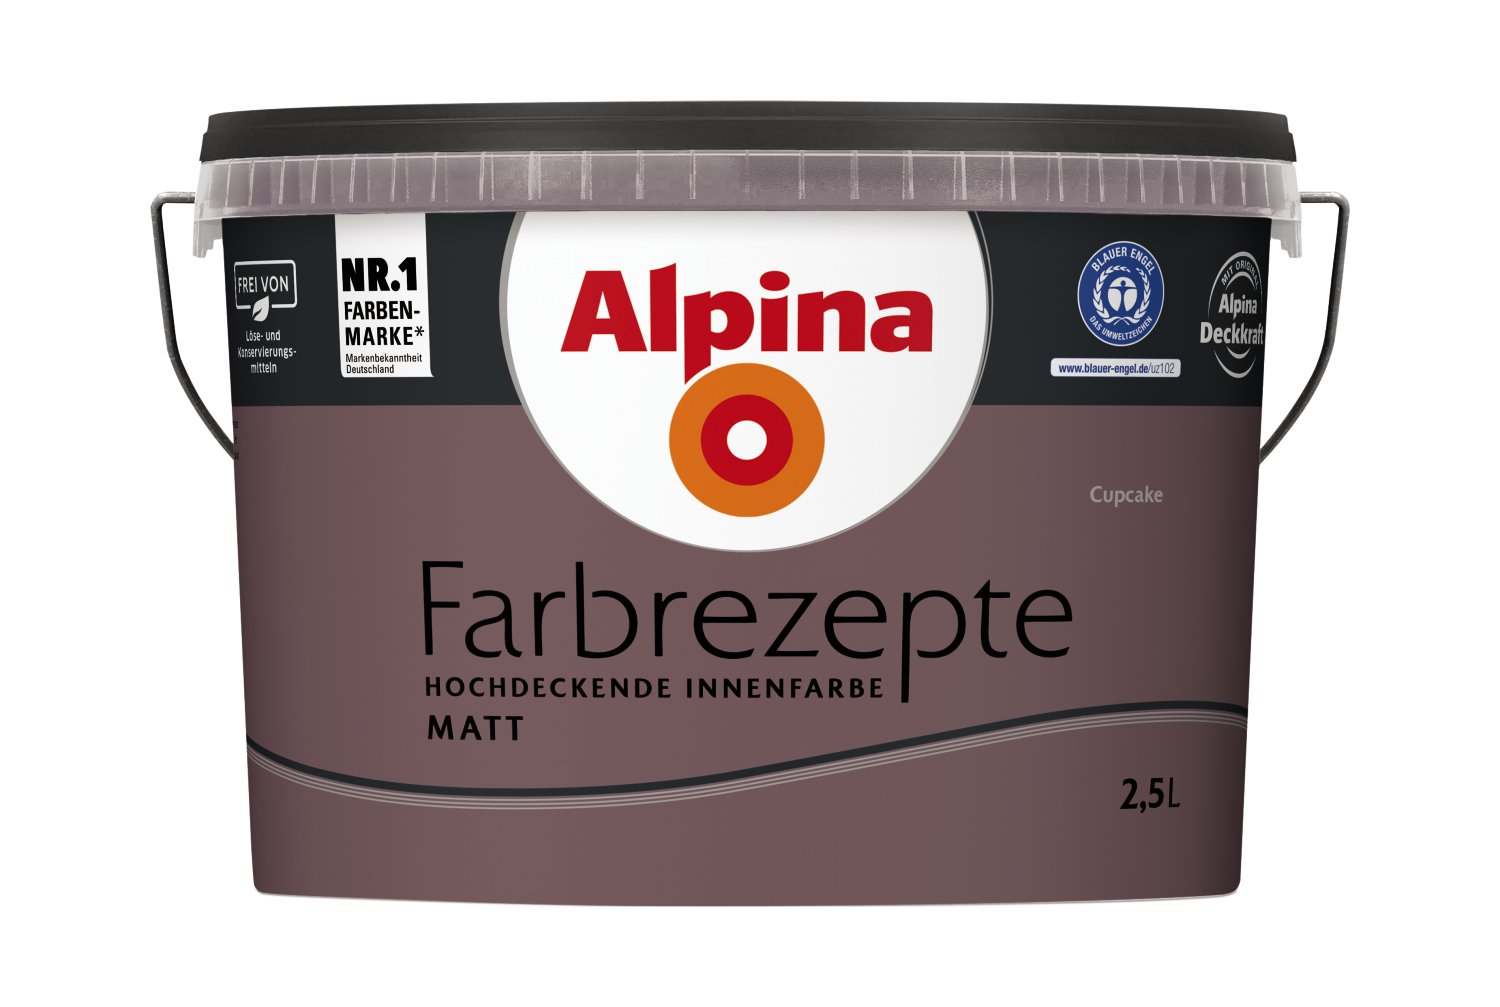 ALPINA Farbrezepte Cupcake 2,5 l